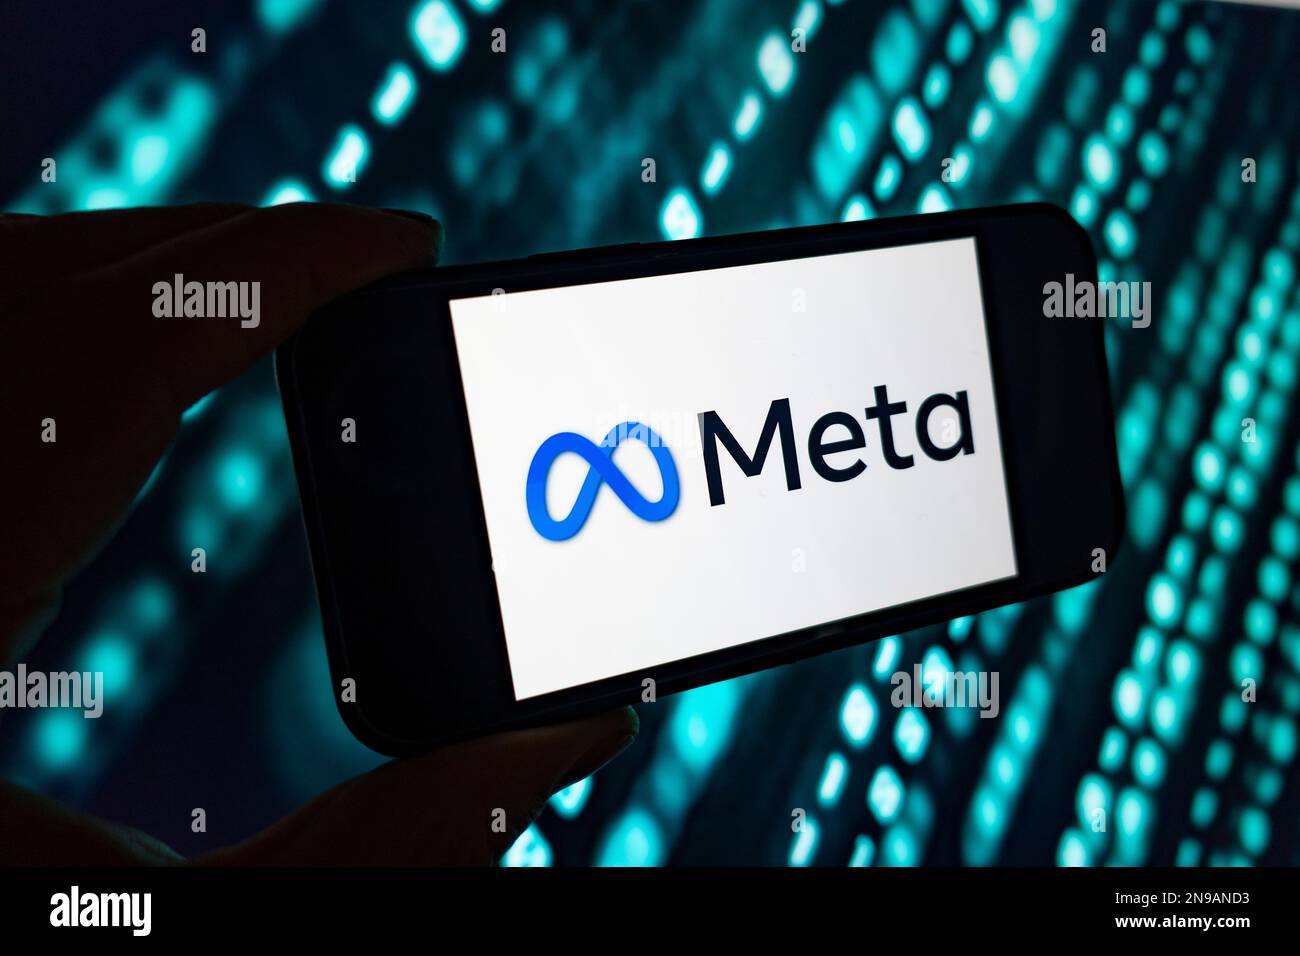 Digital composite image of Facebook Meta logo on phone scree. Stock Photo